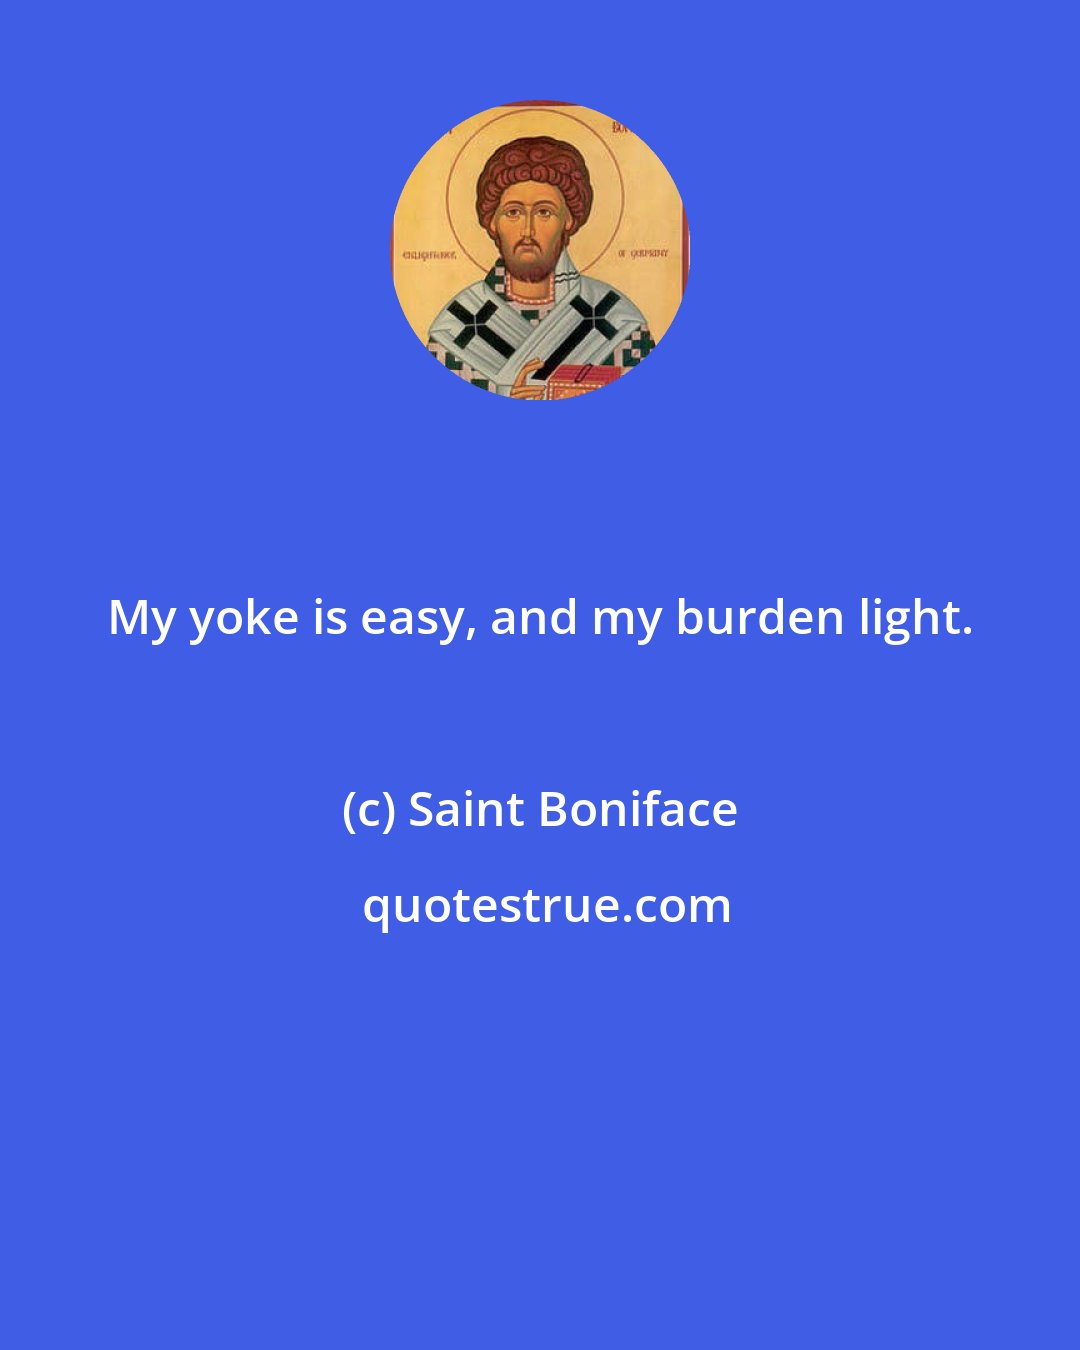 Saint Boniface: My yoke is easy, and my burden light.